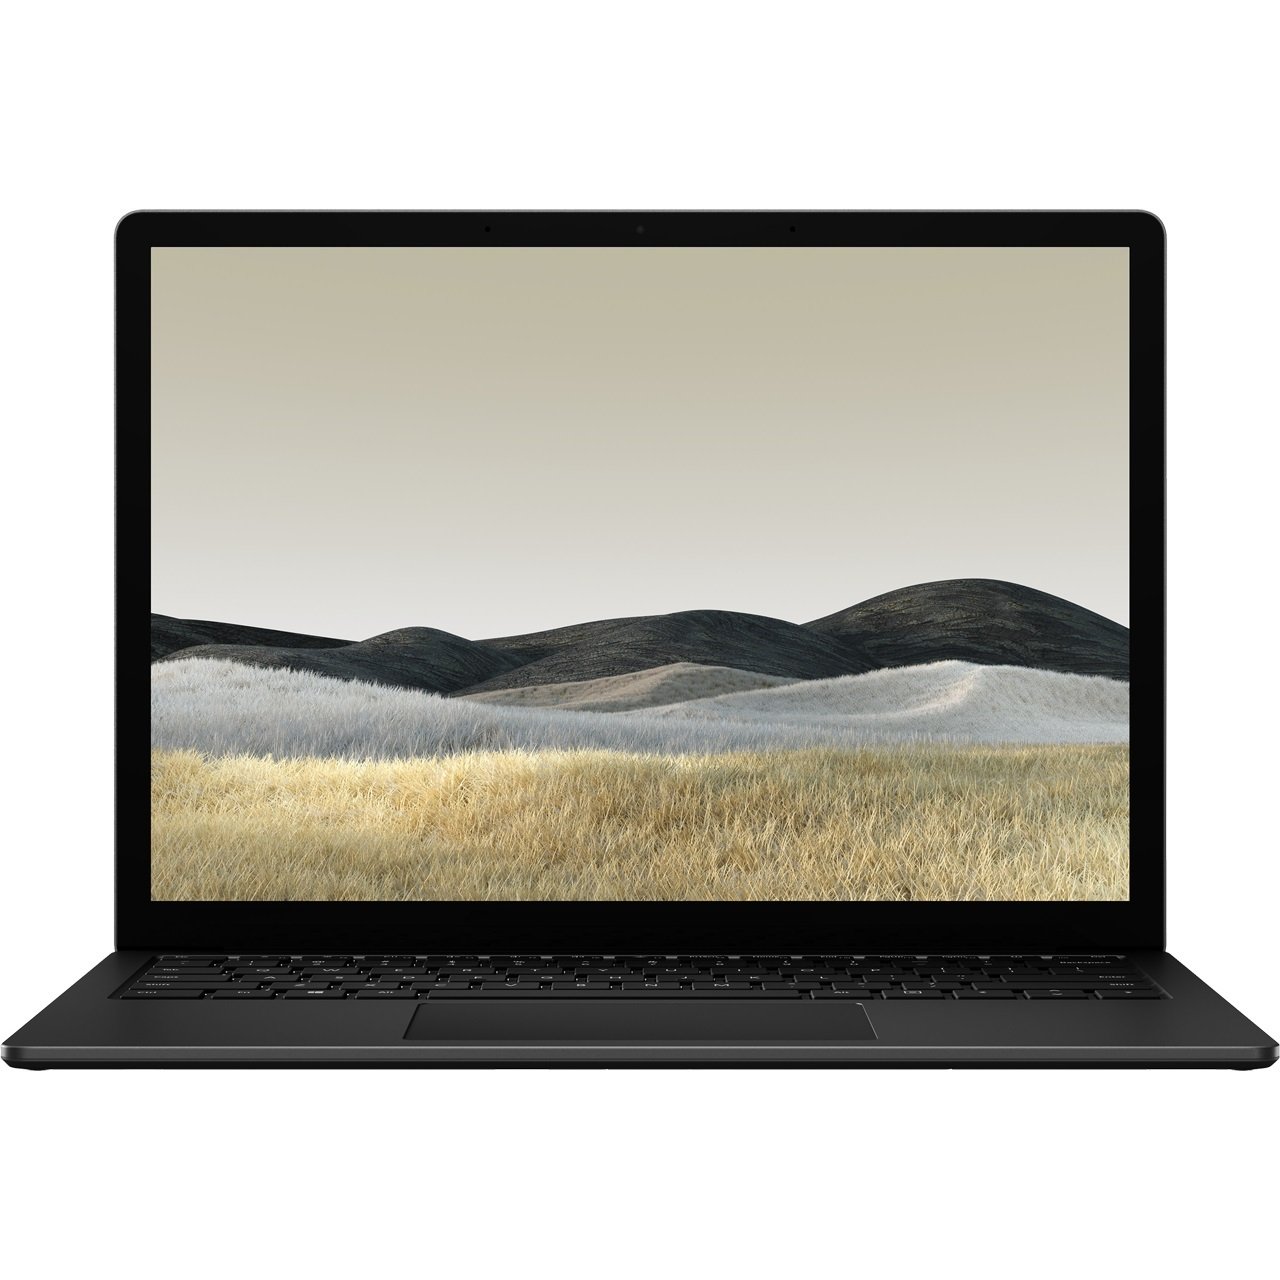 Microsoft Surface Laptop 3 13.5in i7 16GB 256GB - Black